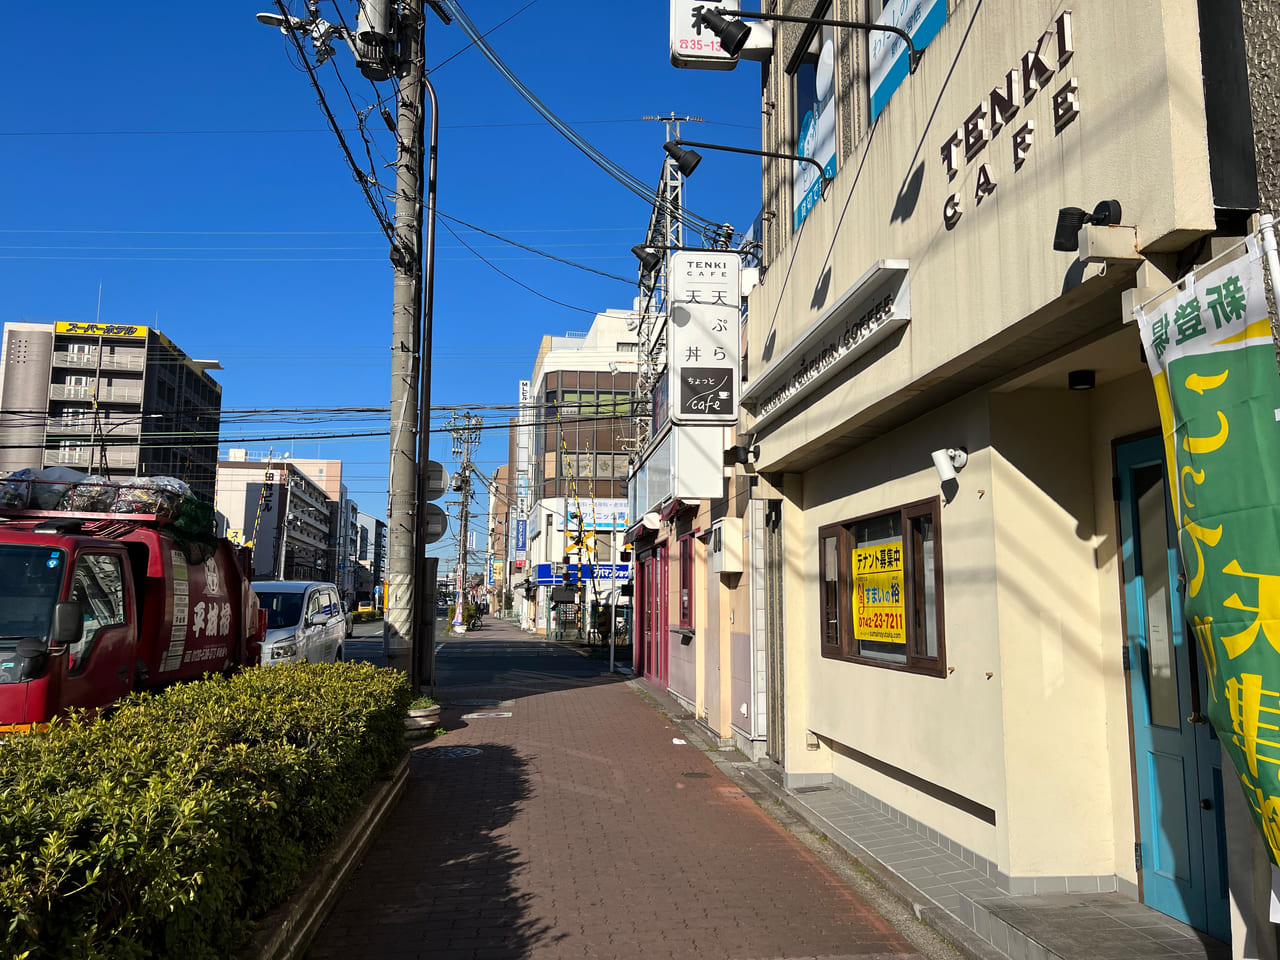 TENKI CAFE　閉店